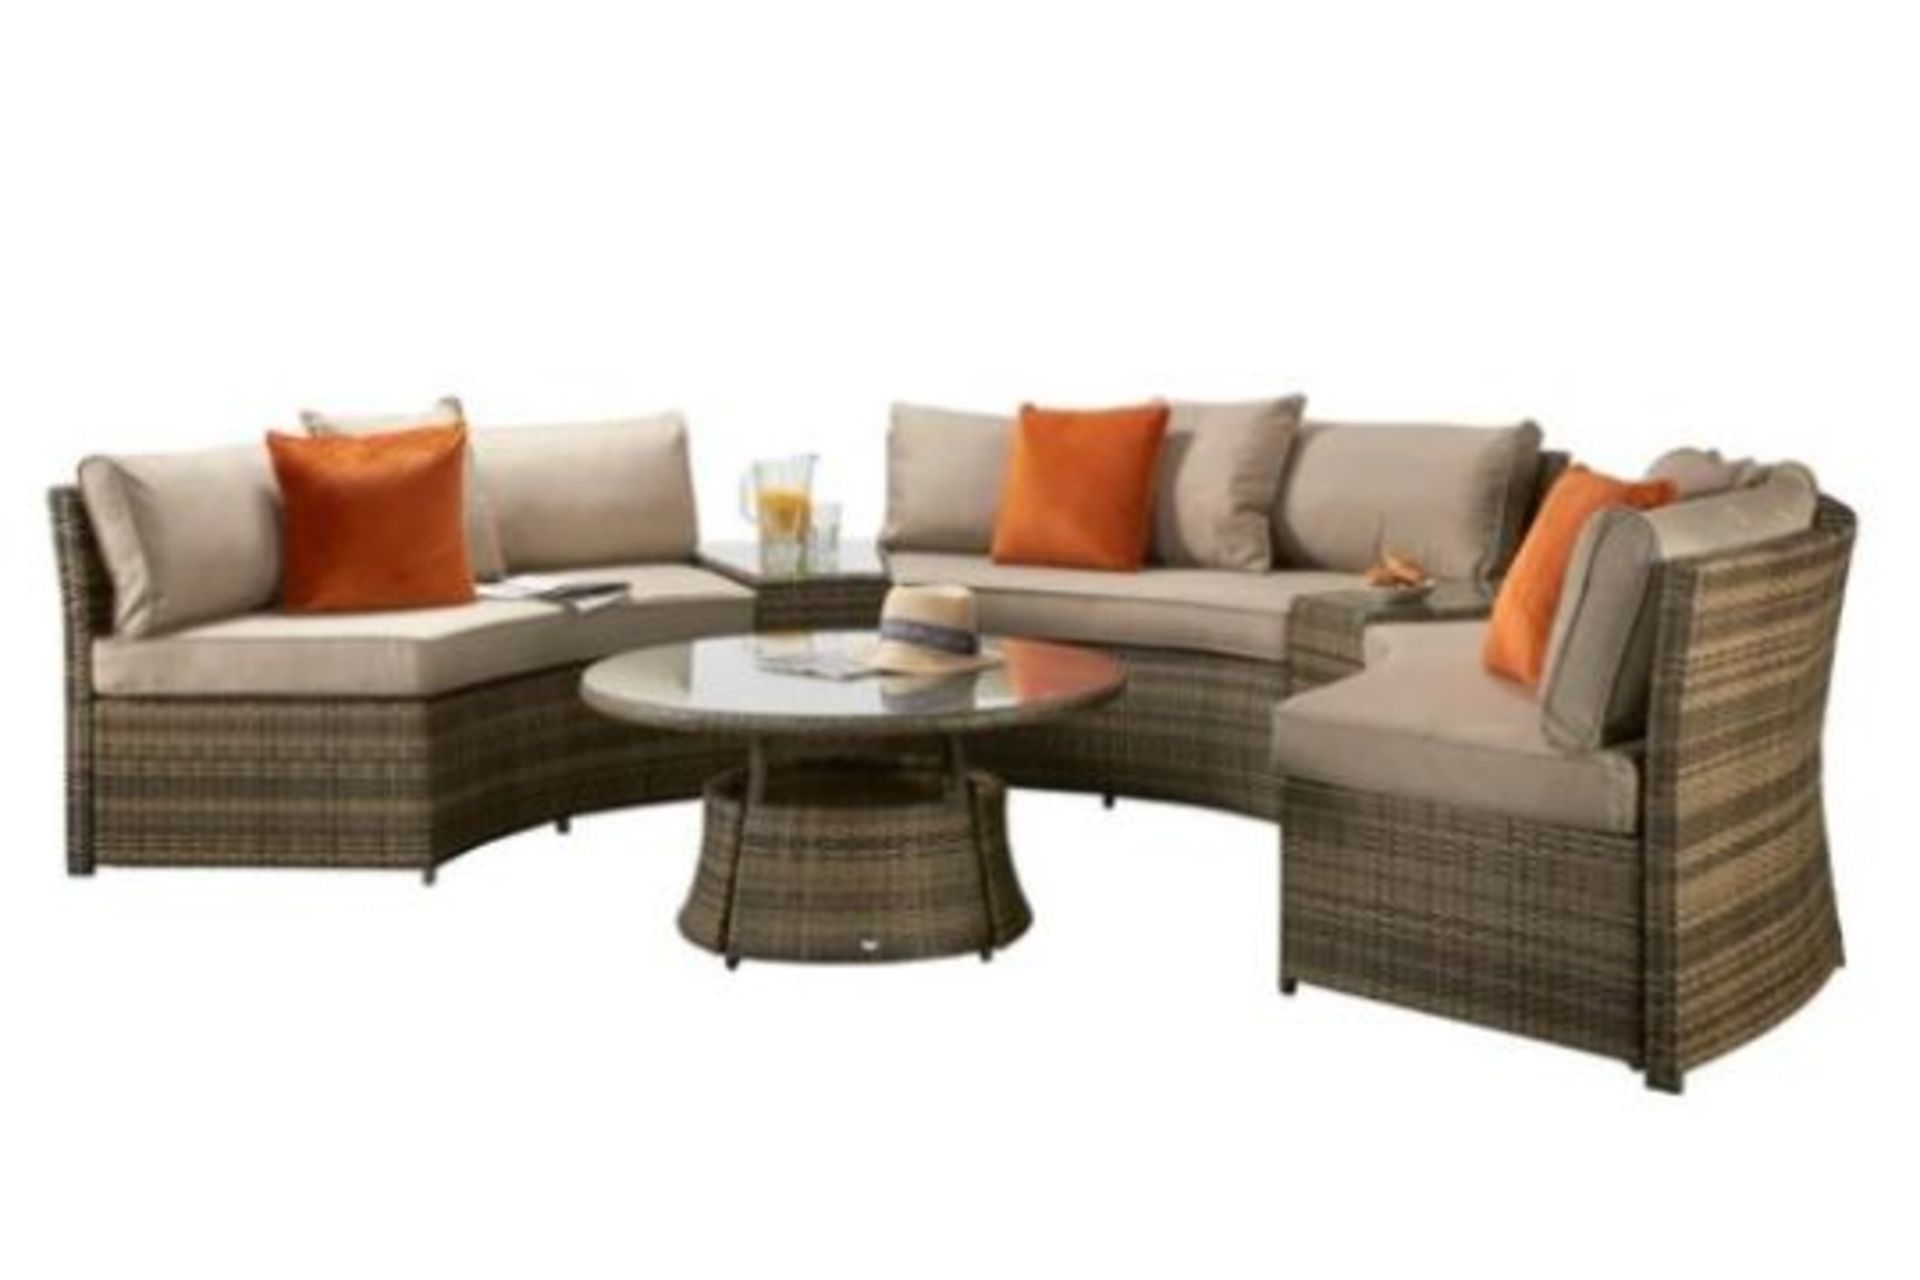 New & Boxed Luxury Signature Weave Garden Furniture - Juliet Brown Half Moon Sofa Set. RRP £2,999. - Image 3 of 6